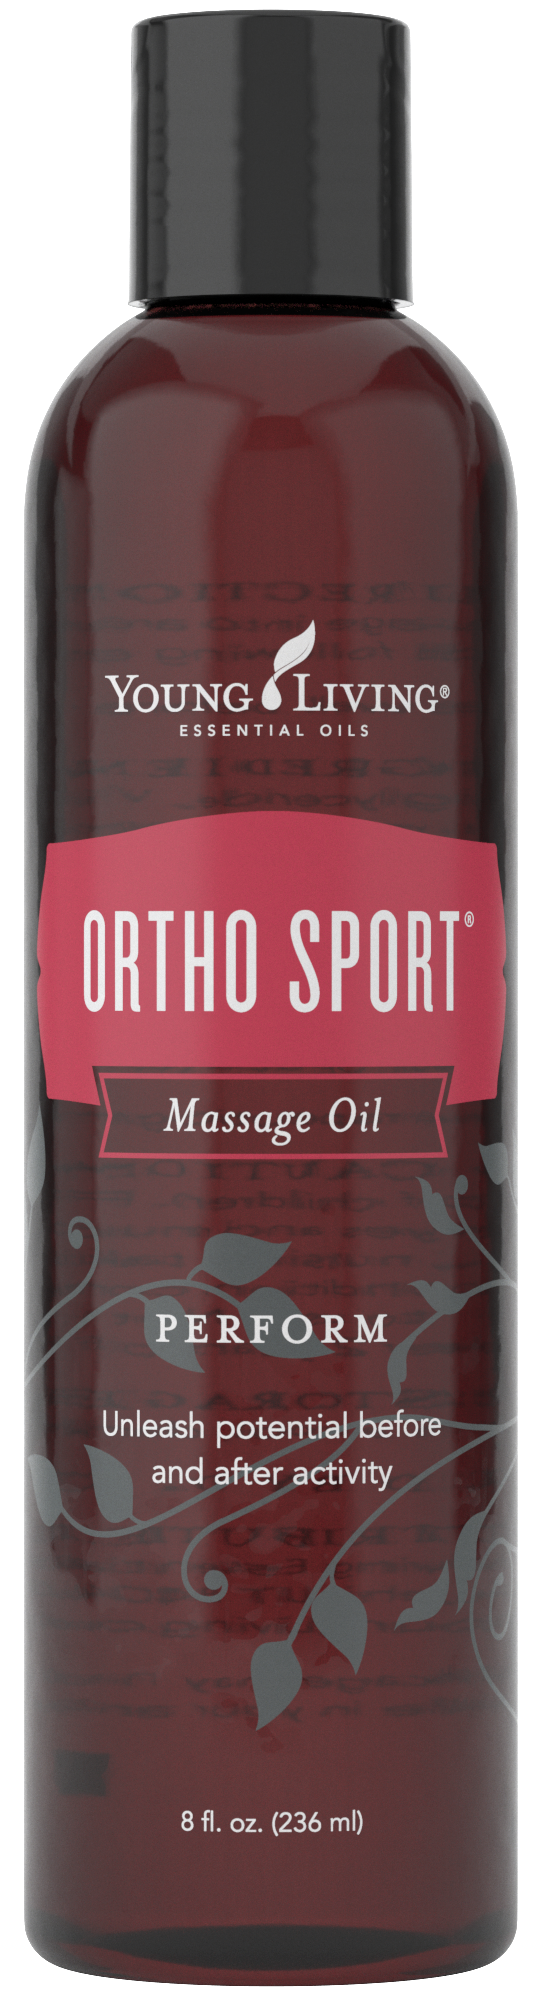 OrthoSport  Massage Oil Silo.png